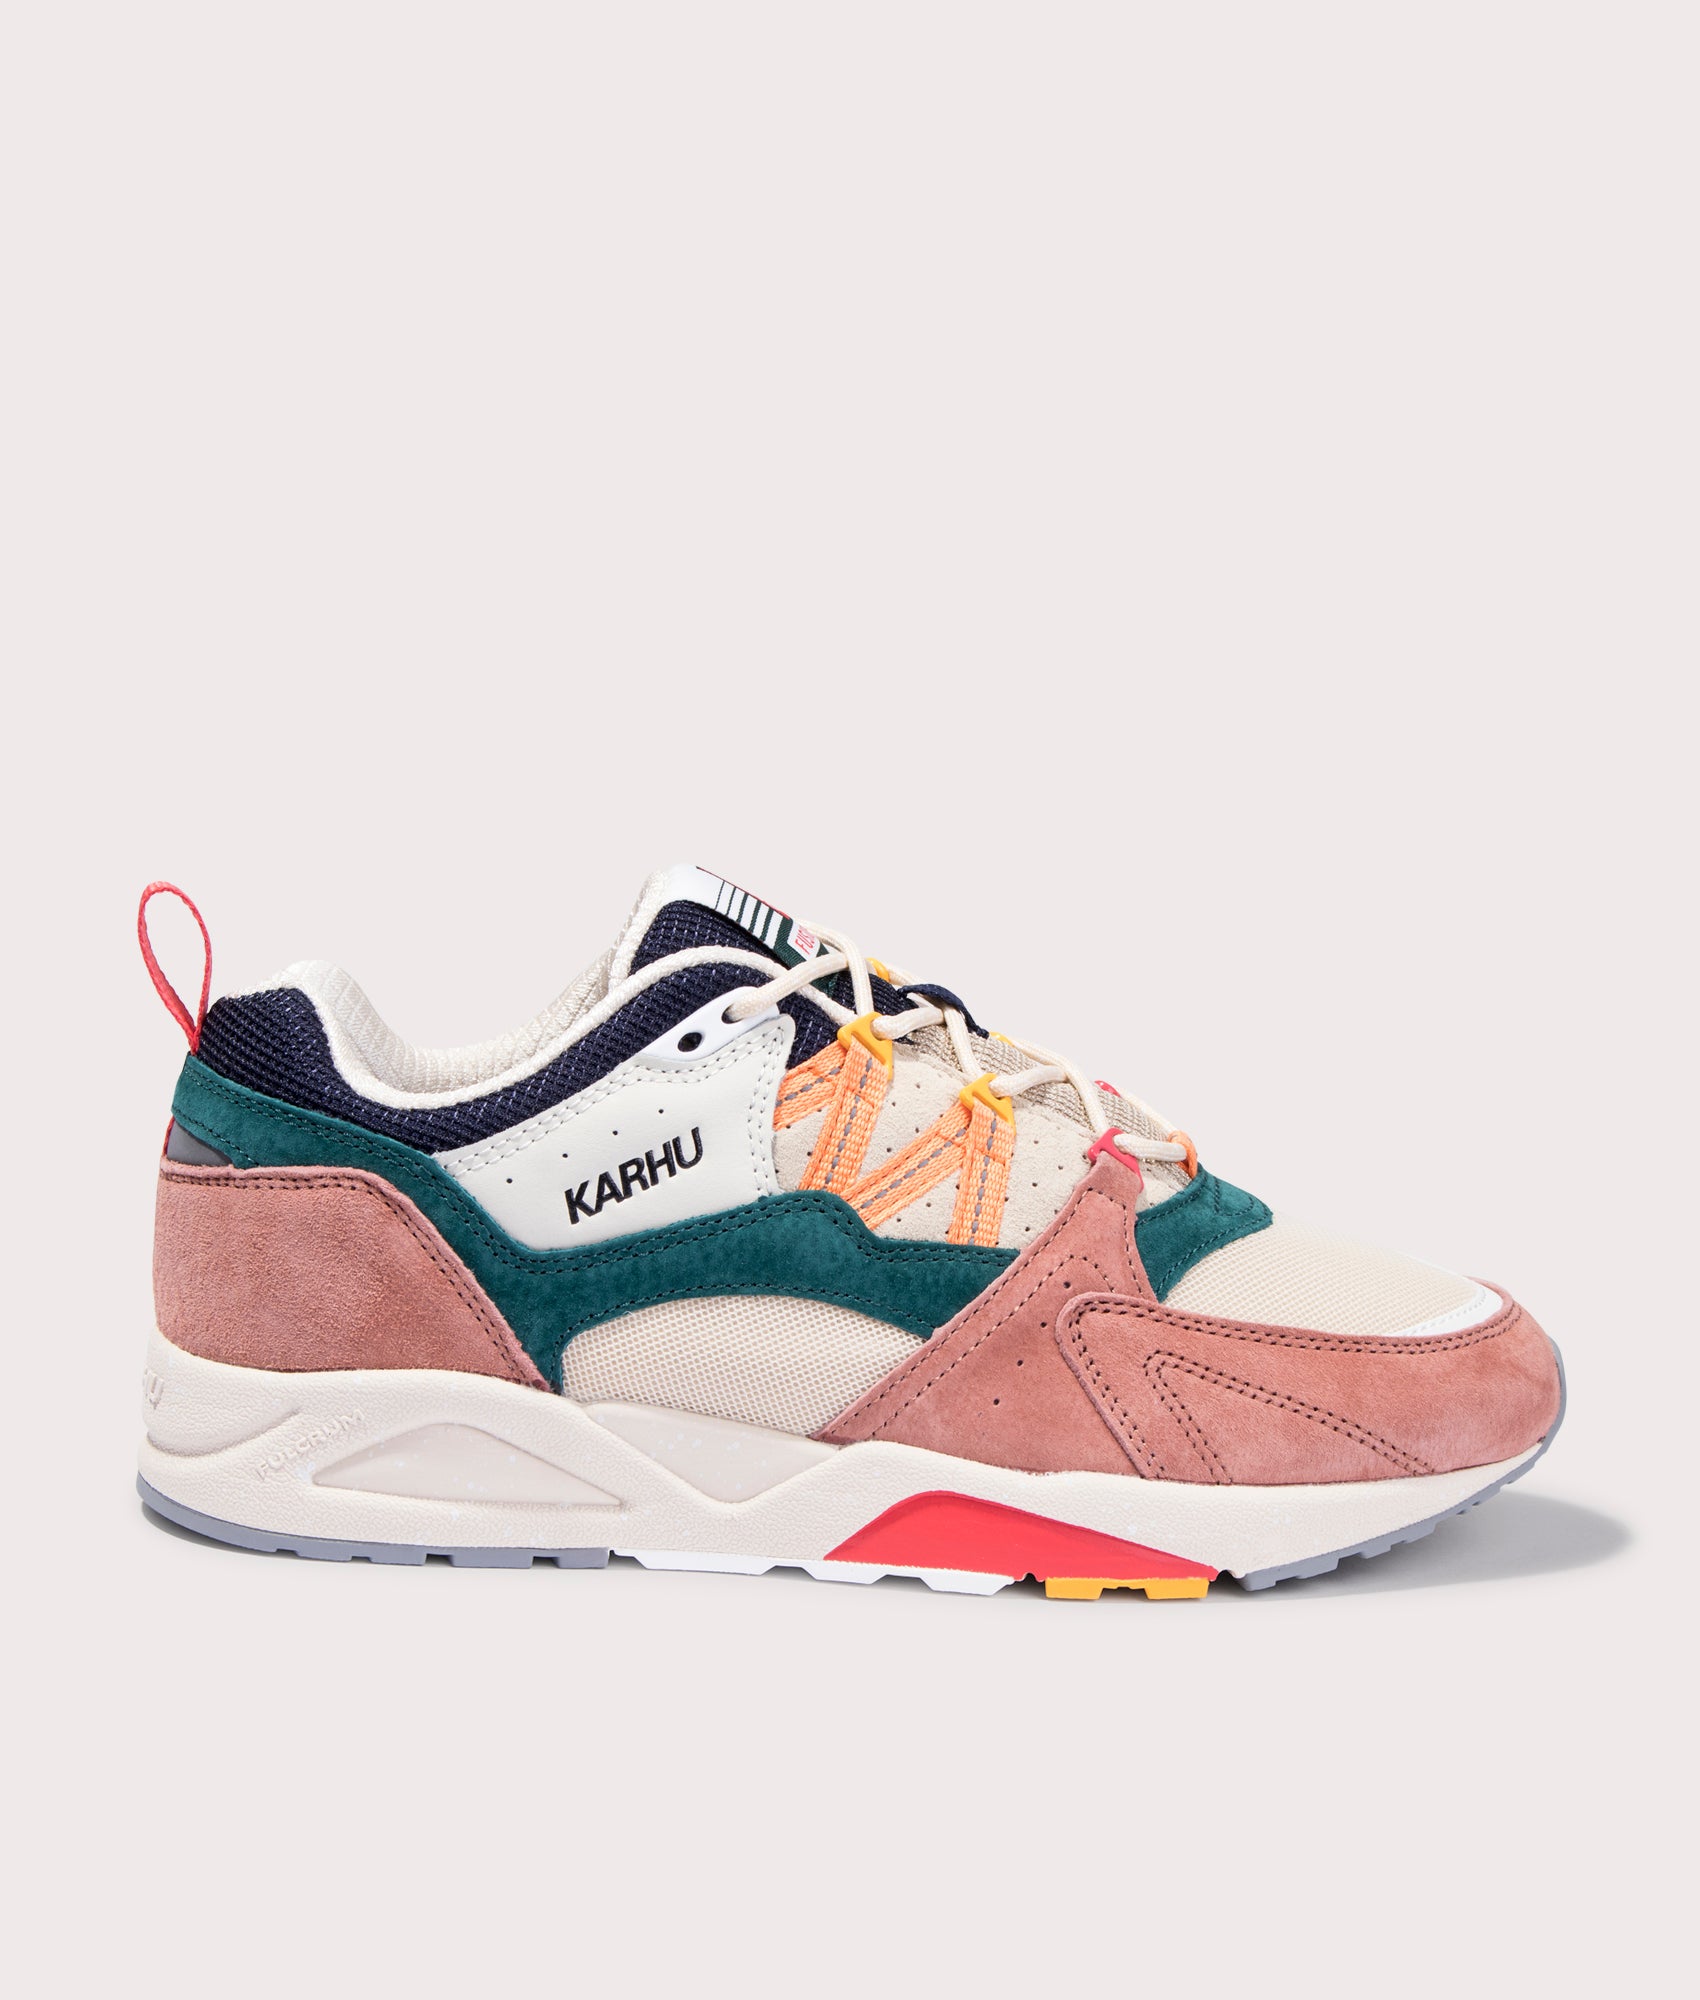 Karhu Mens Fusion 2.0 Sneakers - Colour: Cork/Tangerine - Size: 8